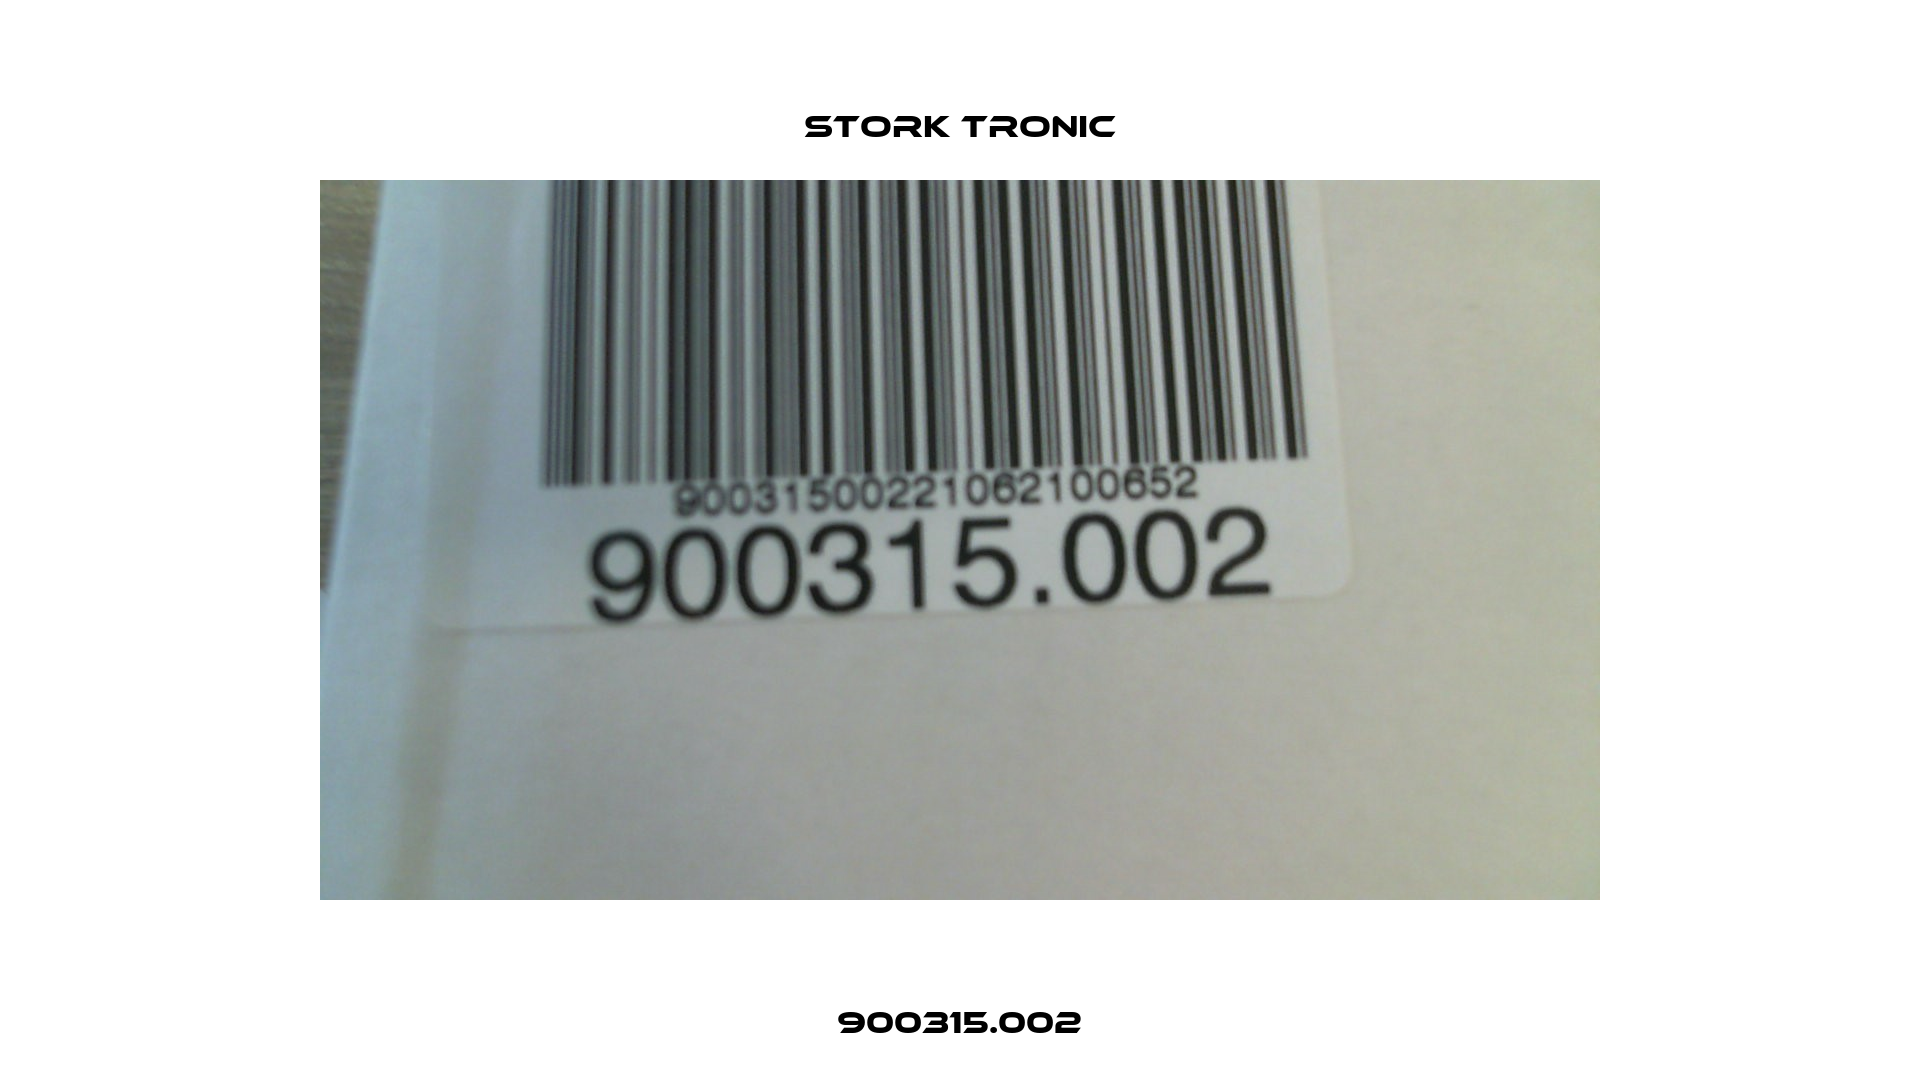 900315.002 Stork tronic